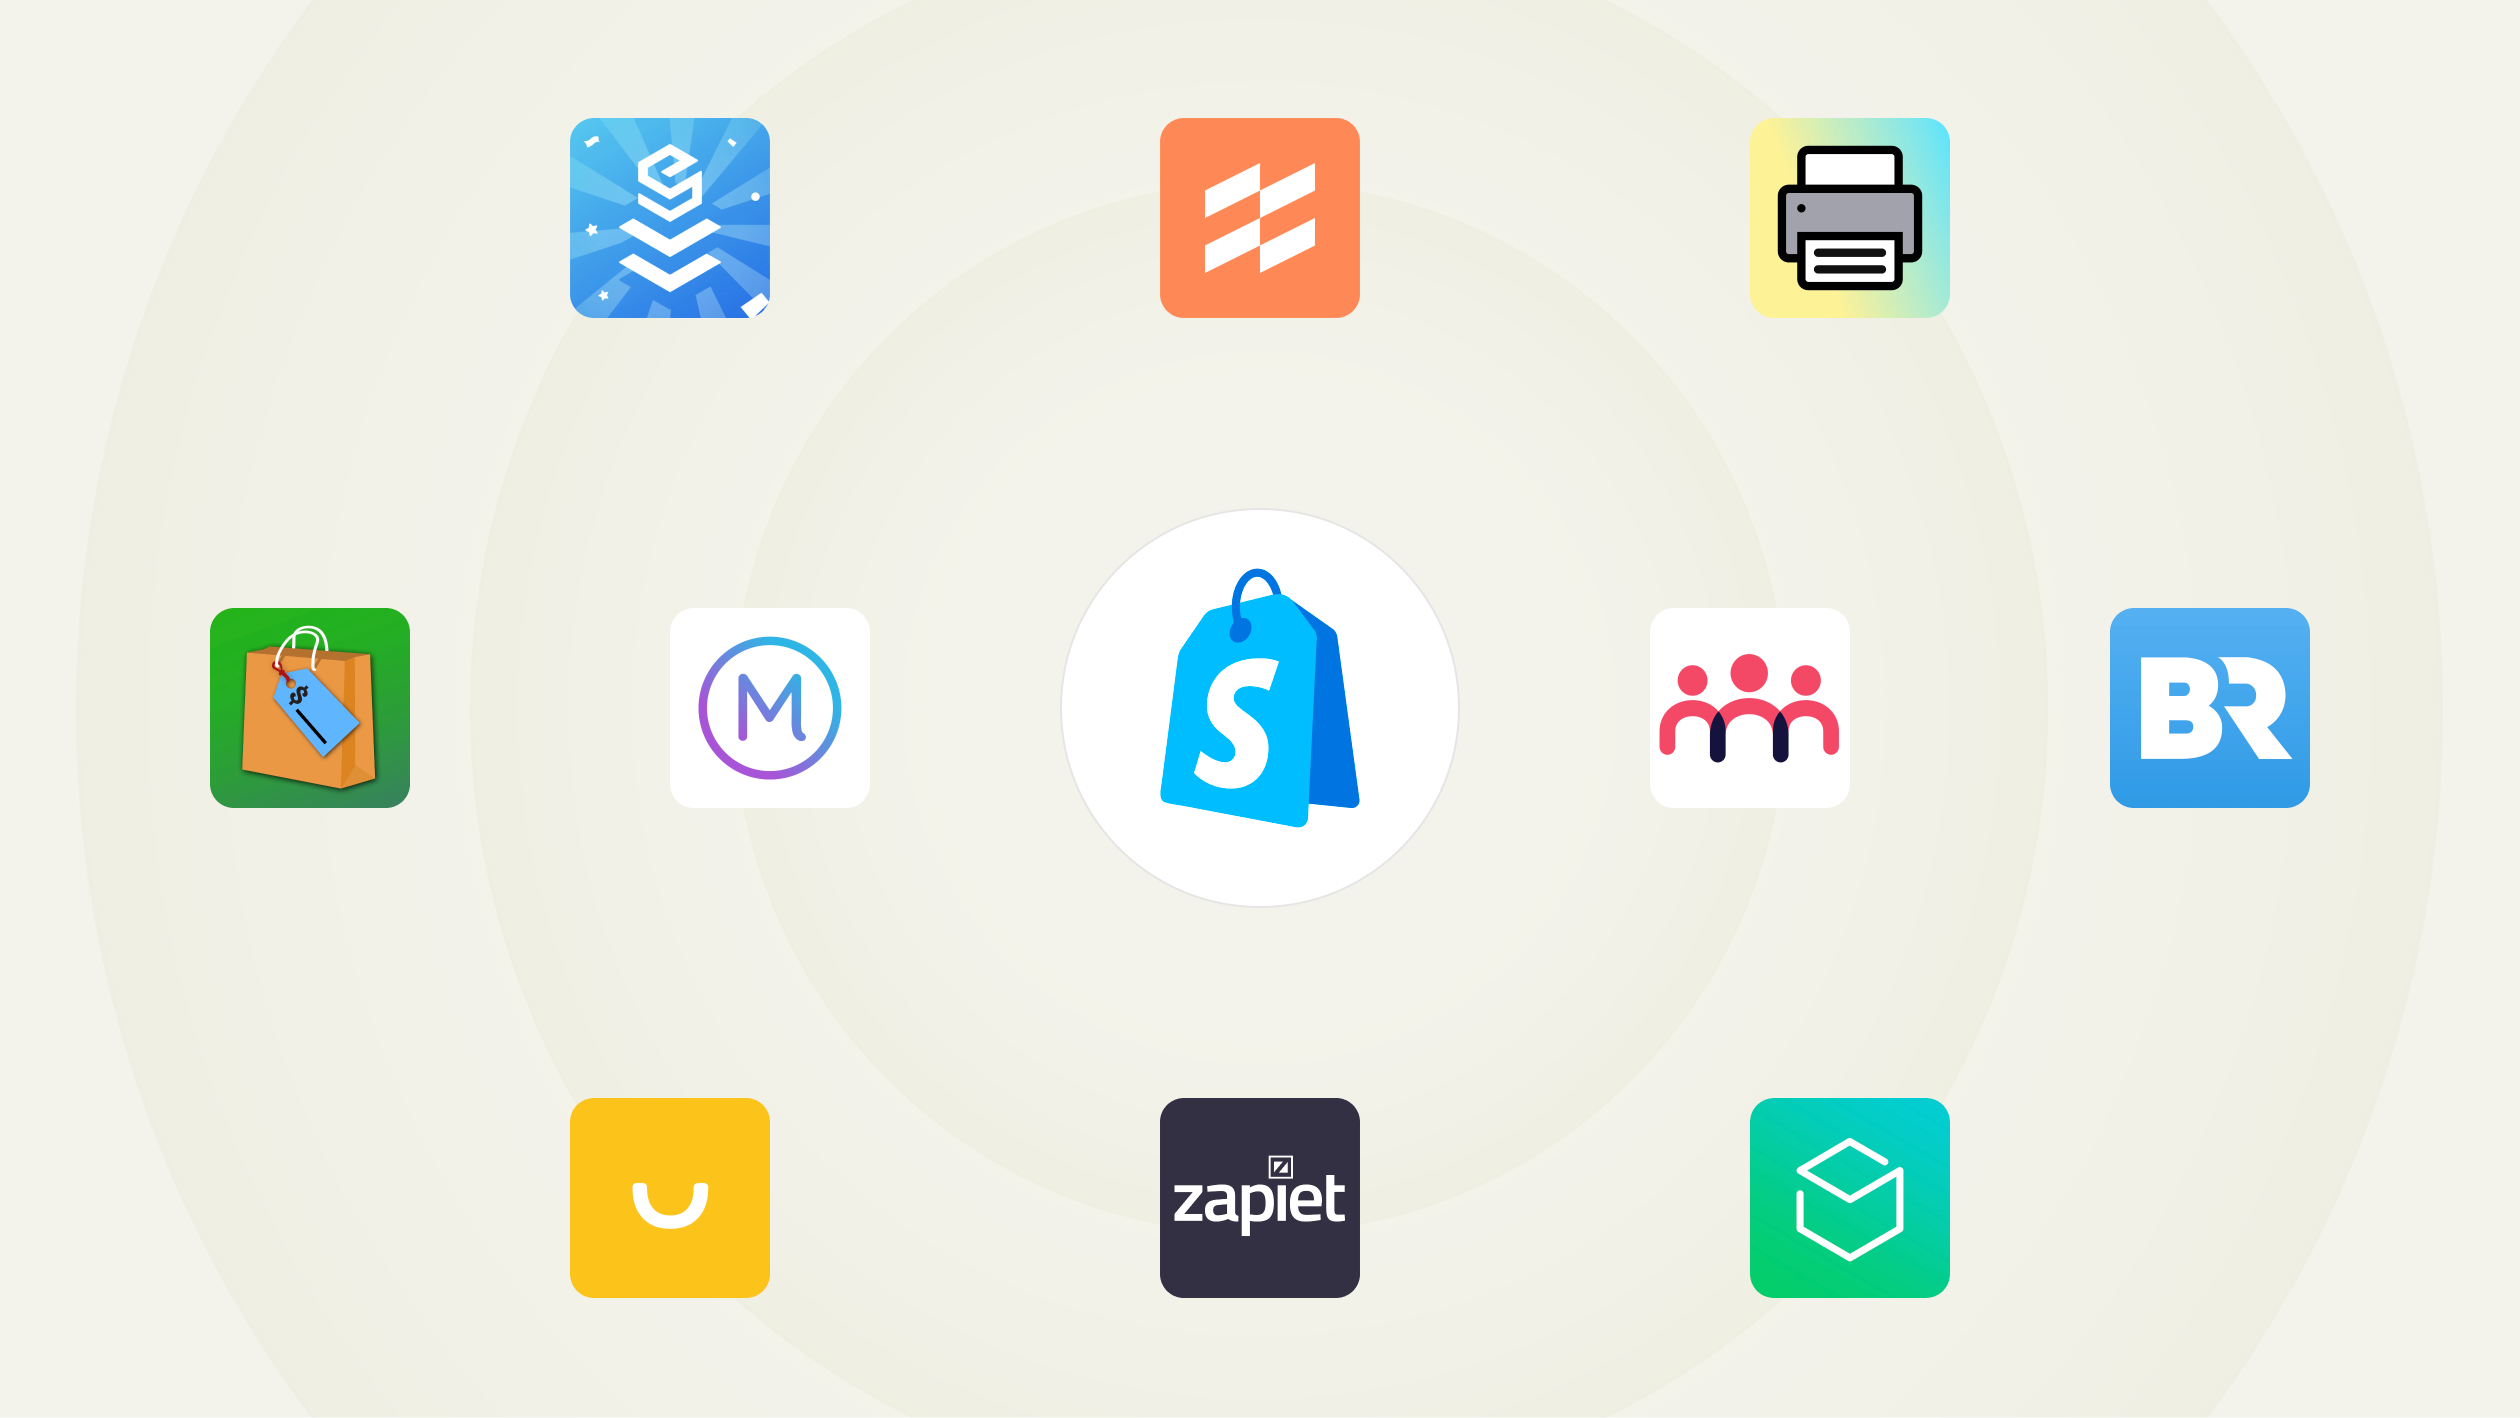 一系列應用程式圖示。中間是 Shopify POS 標誌；標誌周圍是熱門應用程式的圖示：EasyTeam、Filljoy、Zapiet、Optizio、Stocky、Order Printer、Smile、Better Reports、Marsello 和 Endear。